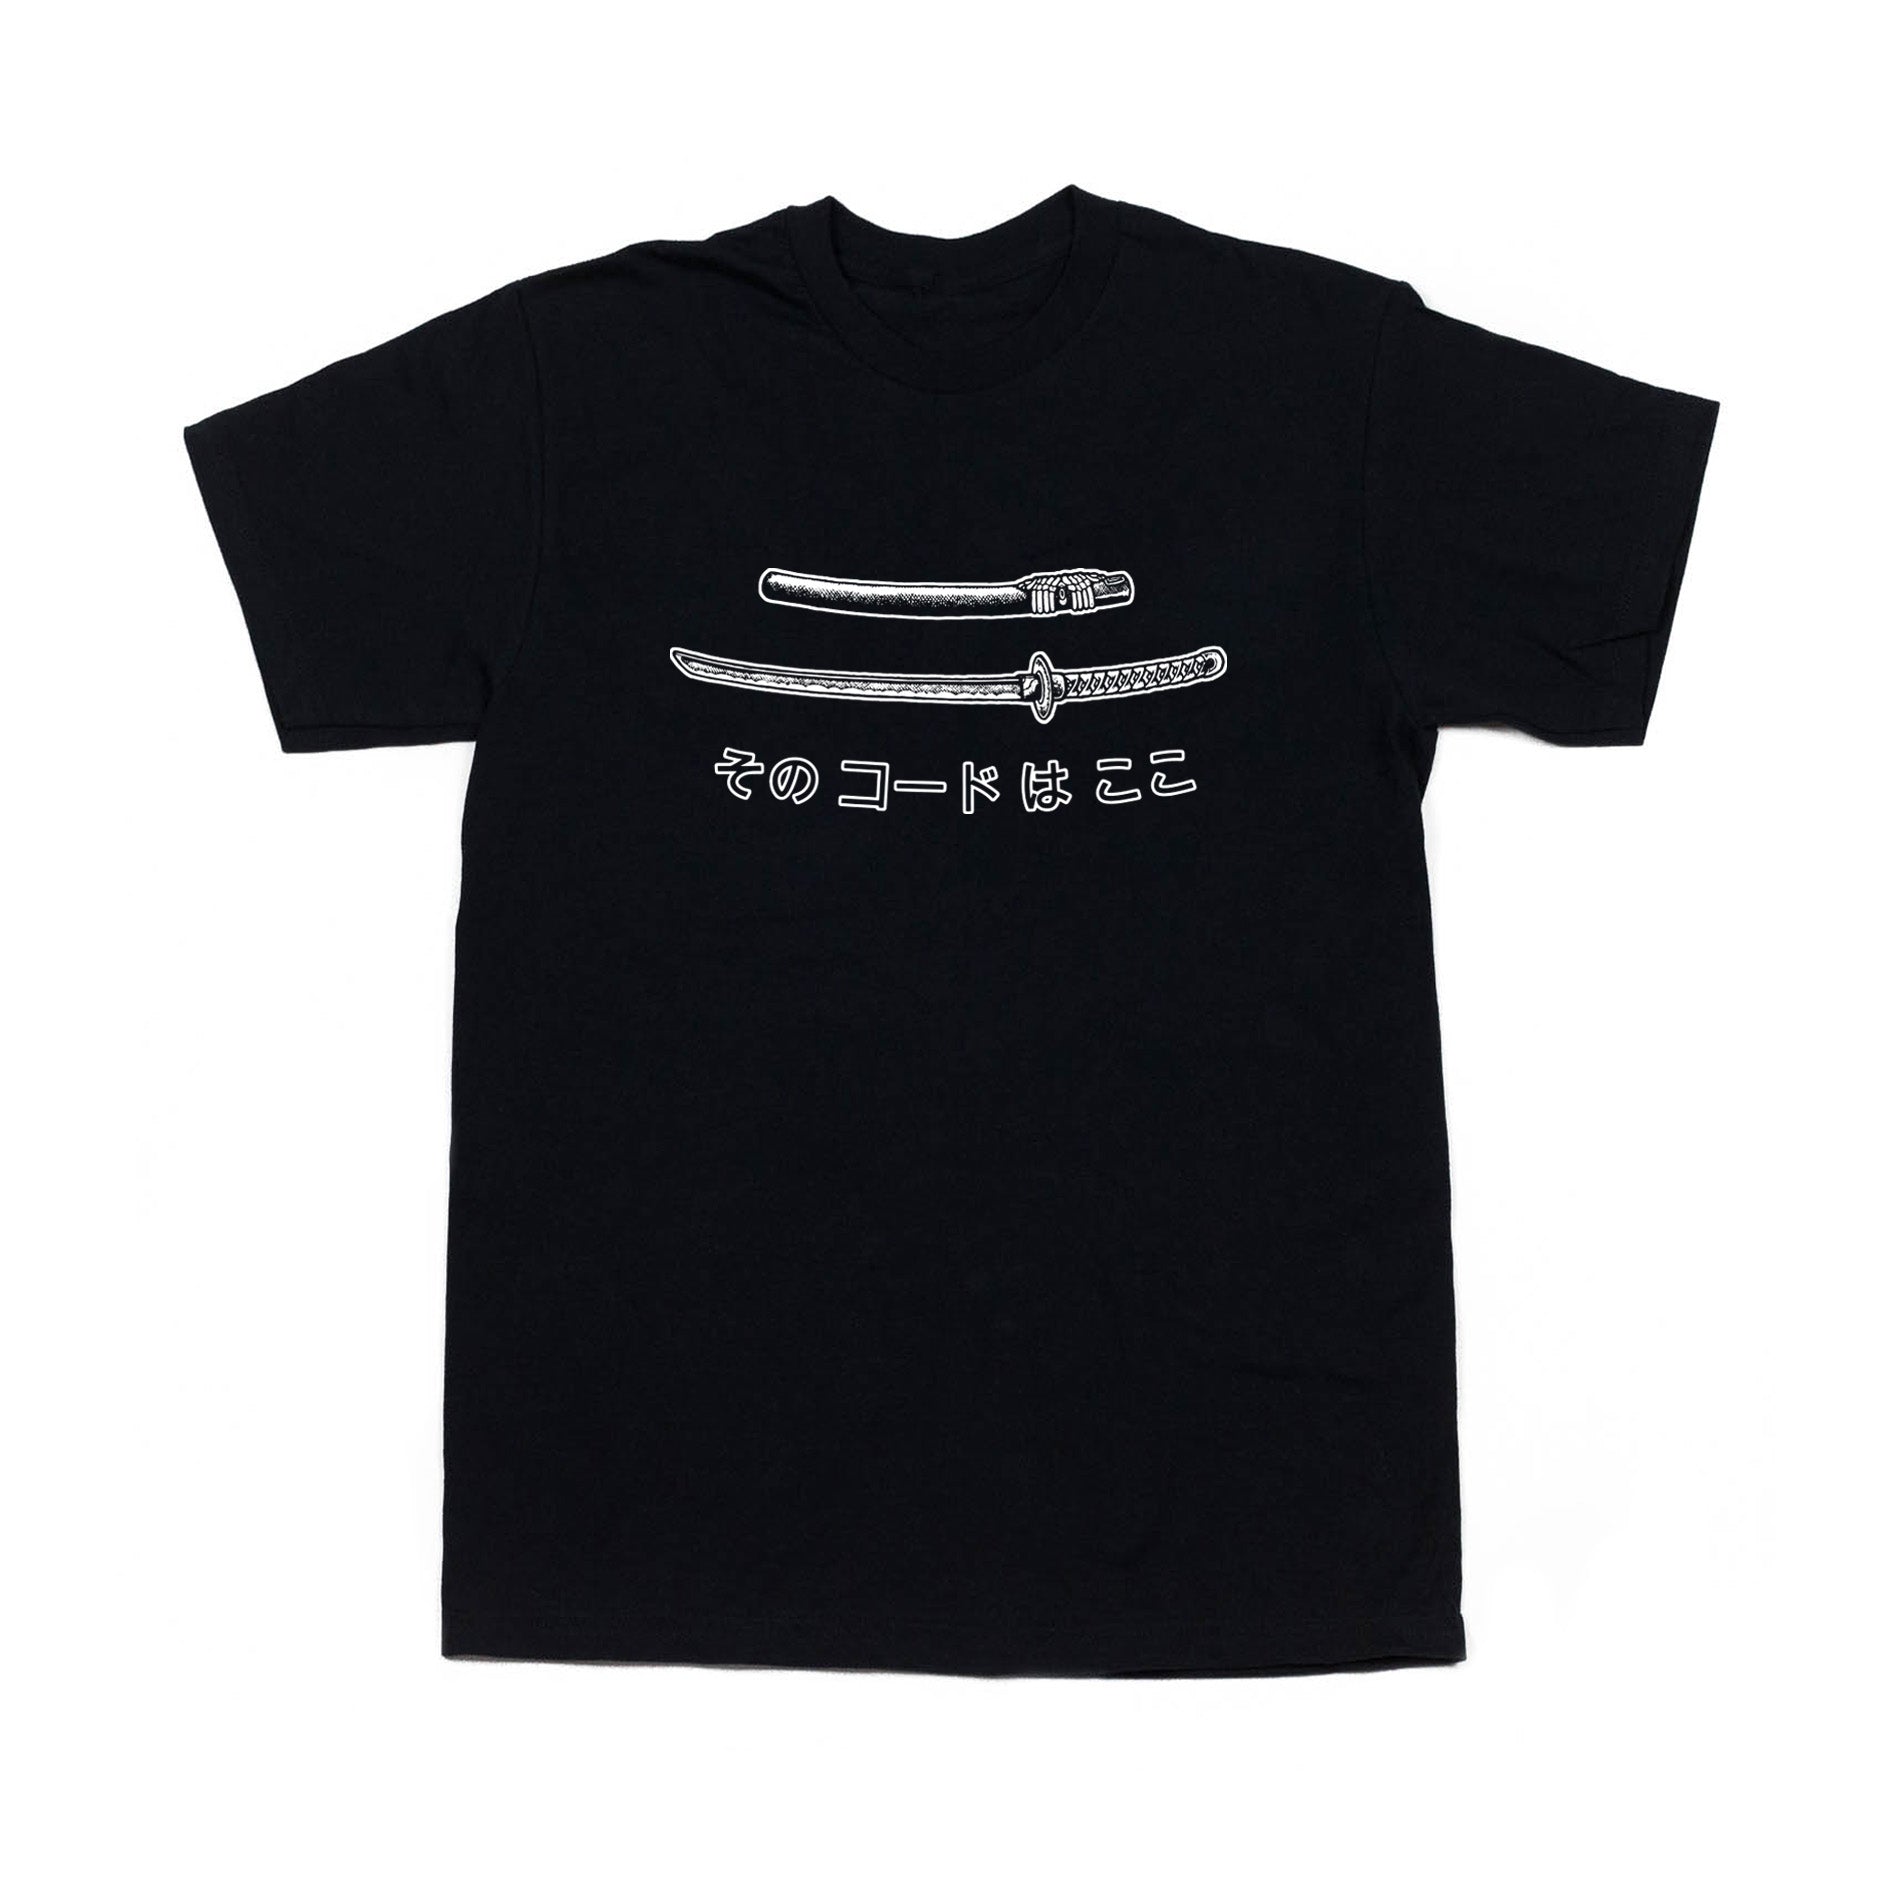 0115 Records - T-Shirts - 0115 x Katana T-shirt (Black)